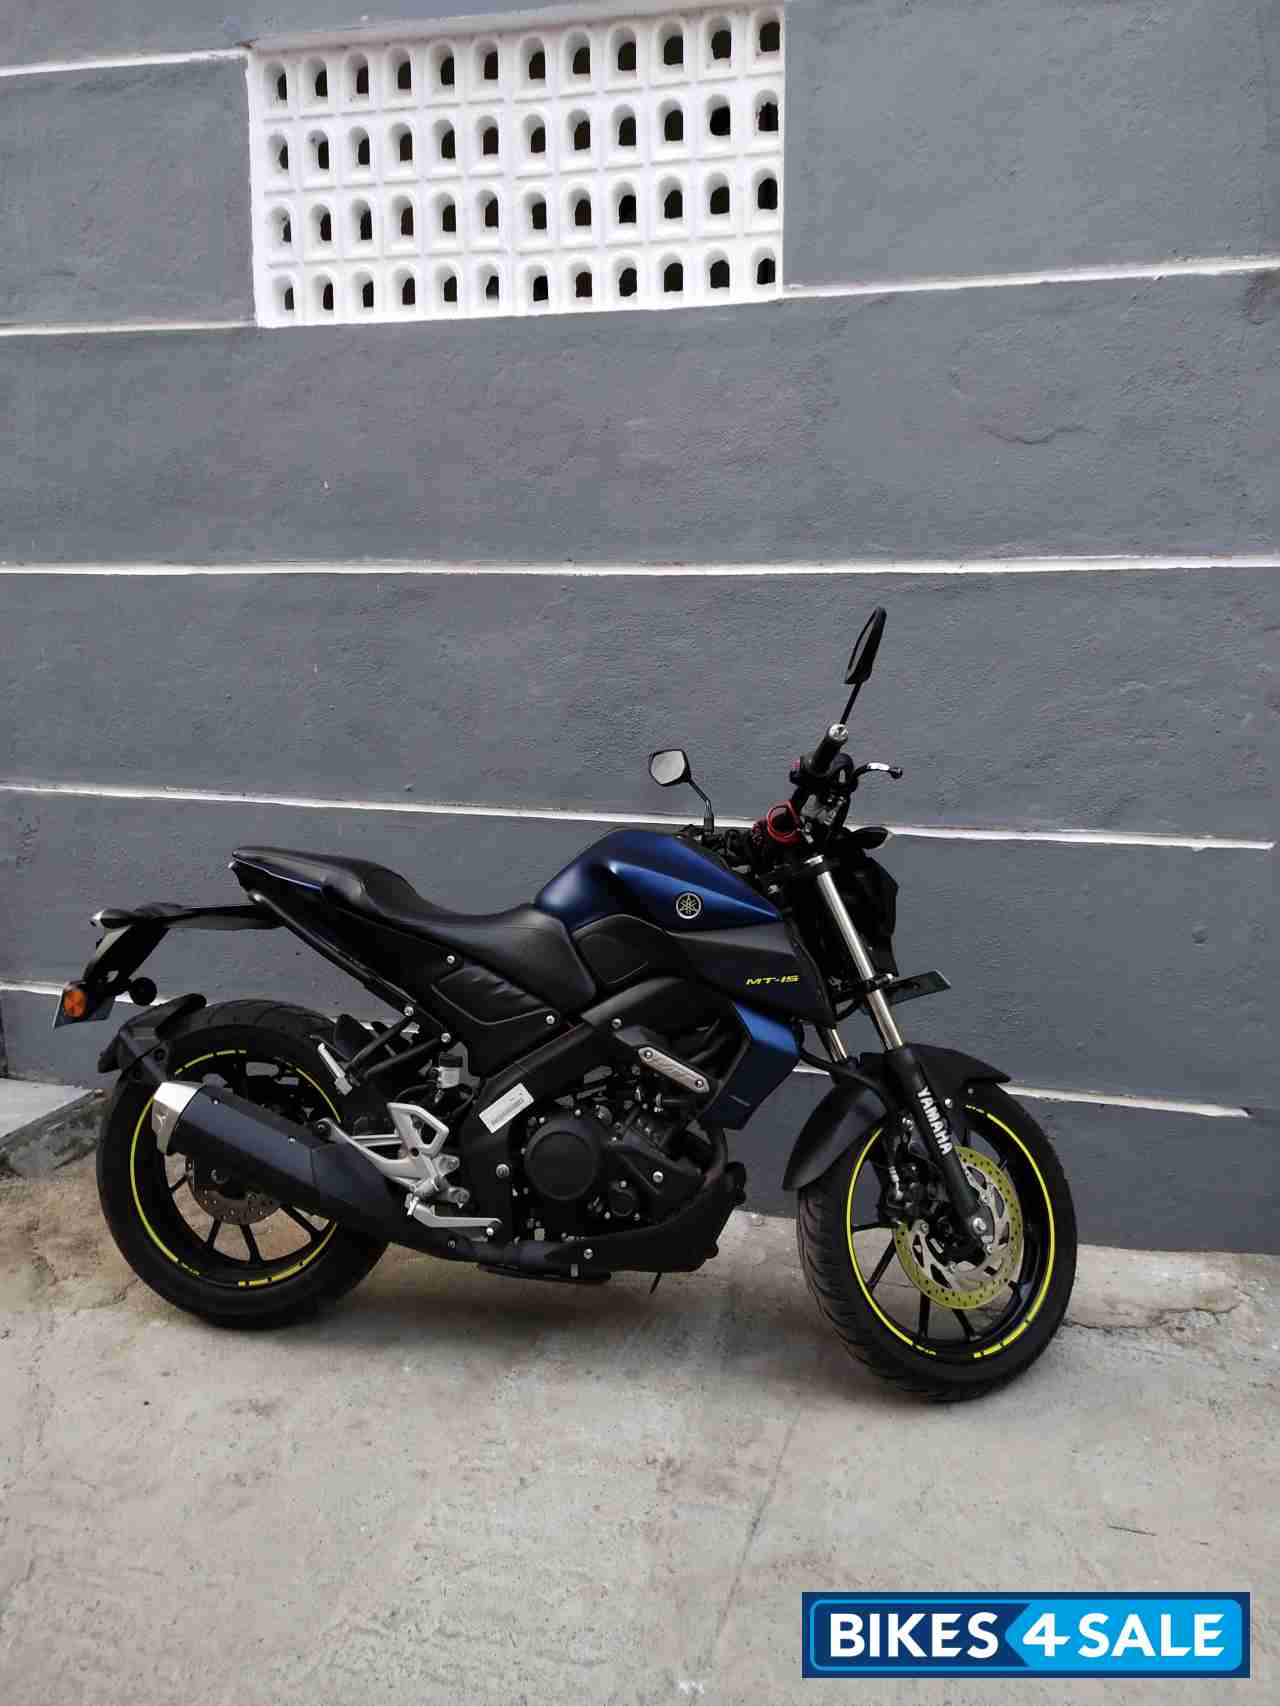 Used 2019 model Yamaha MT-15 for sale in Chennai. ID 281814. Dark Matte ...